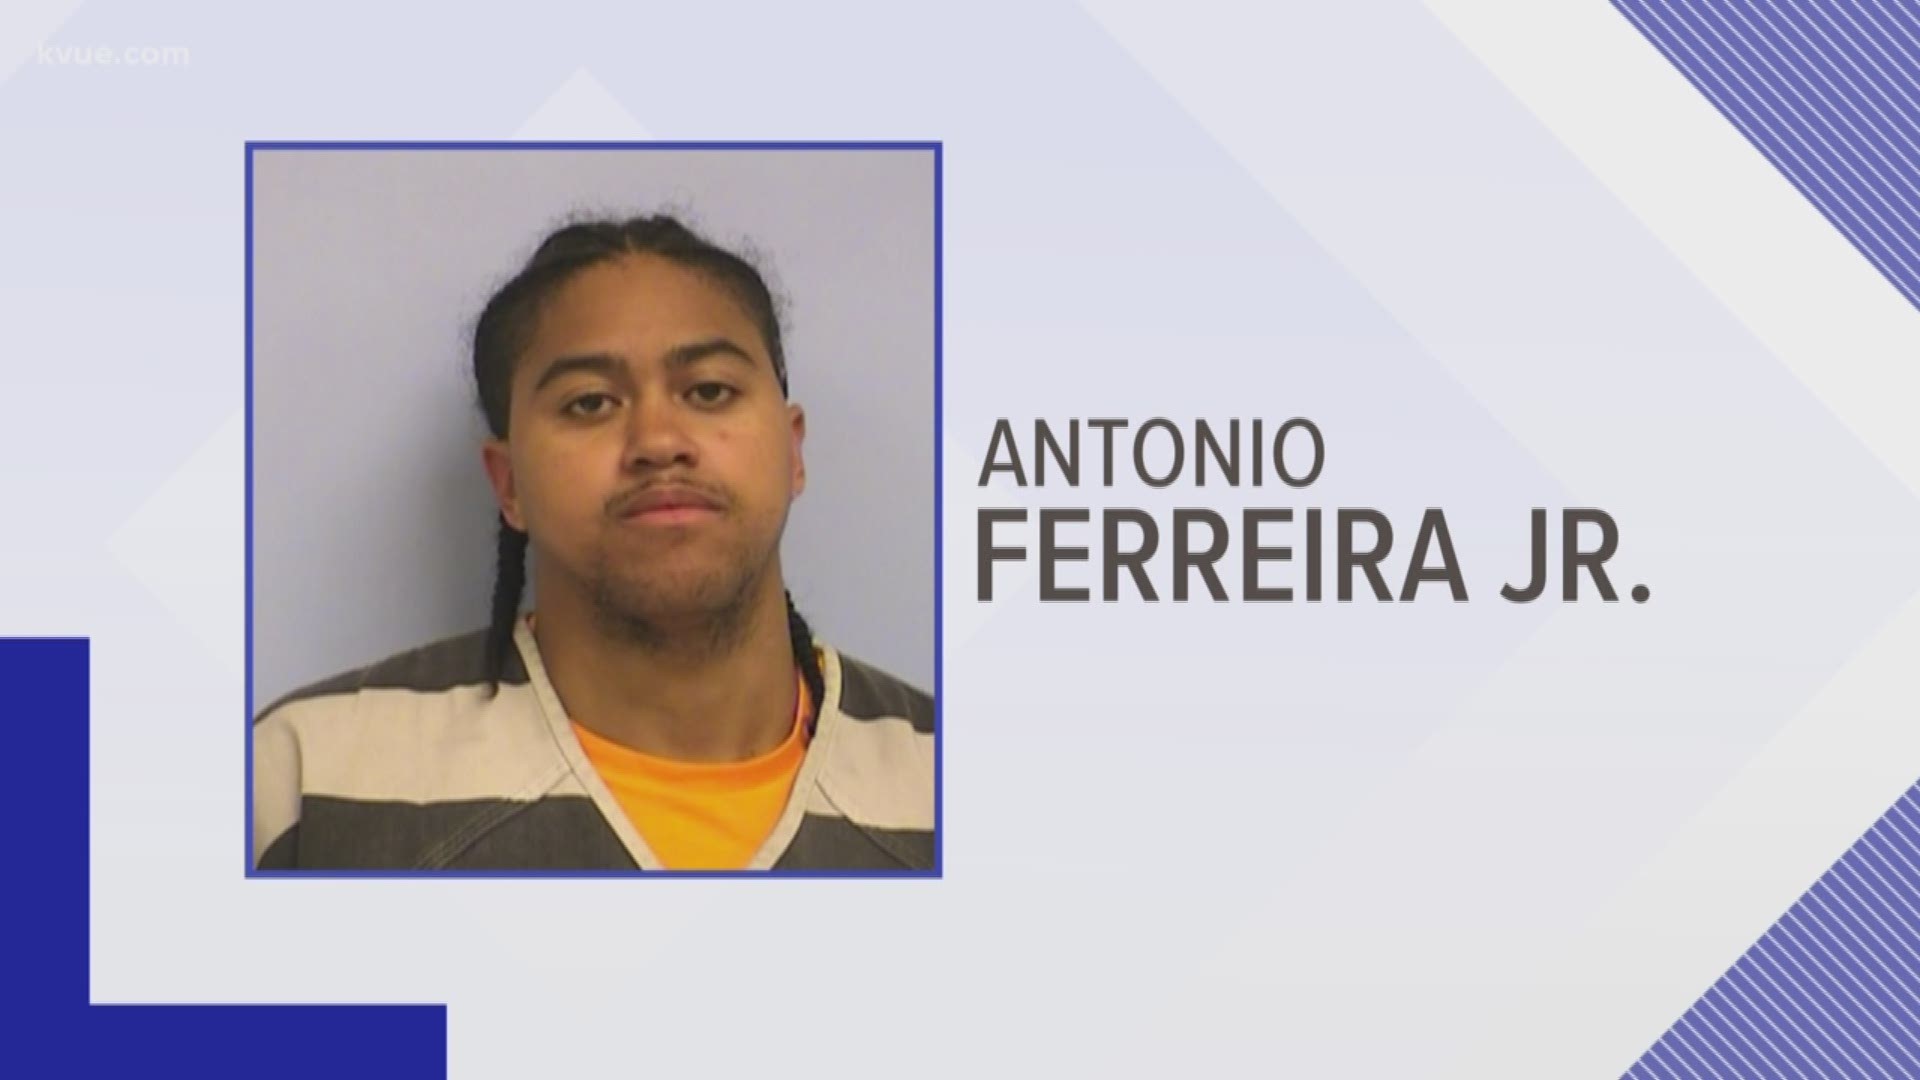 Antonio Ferreira Jr. is accused of scalping badges for access to SXSW.